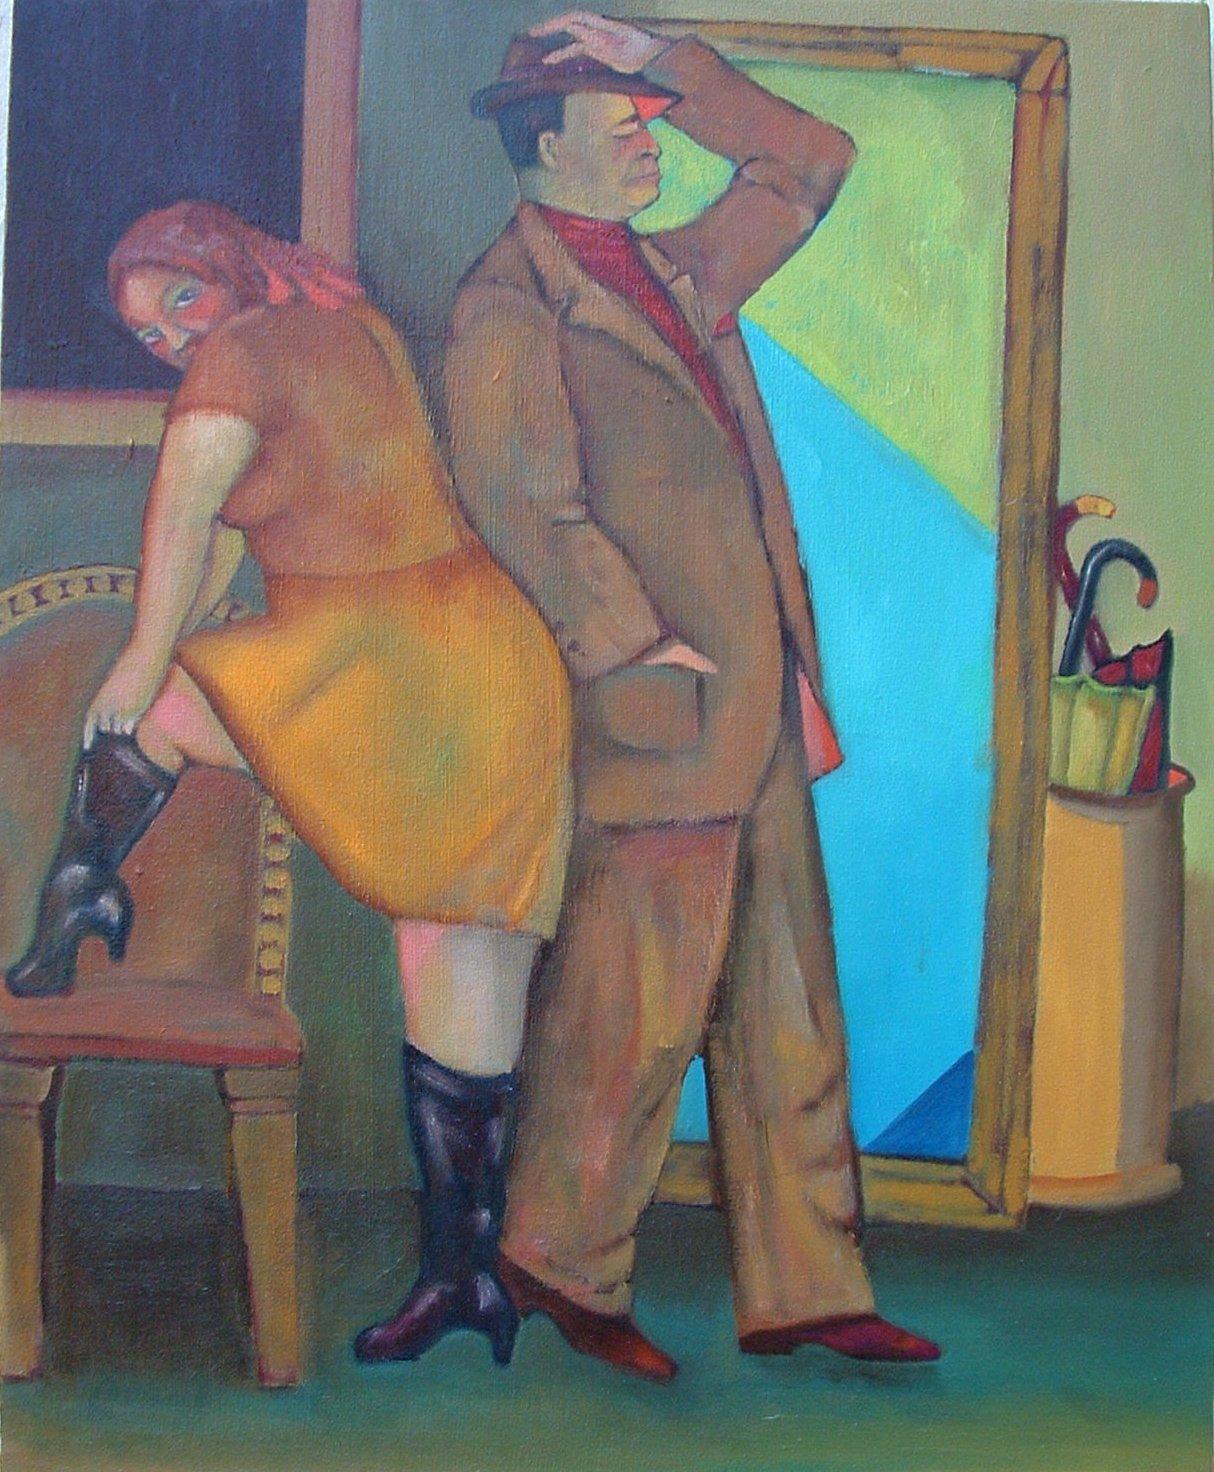 Stephen Basso Figurative Painting - Melodramatic Breakup romantic couple theme human drama humorous undertones